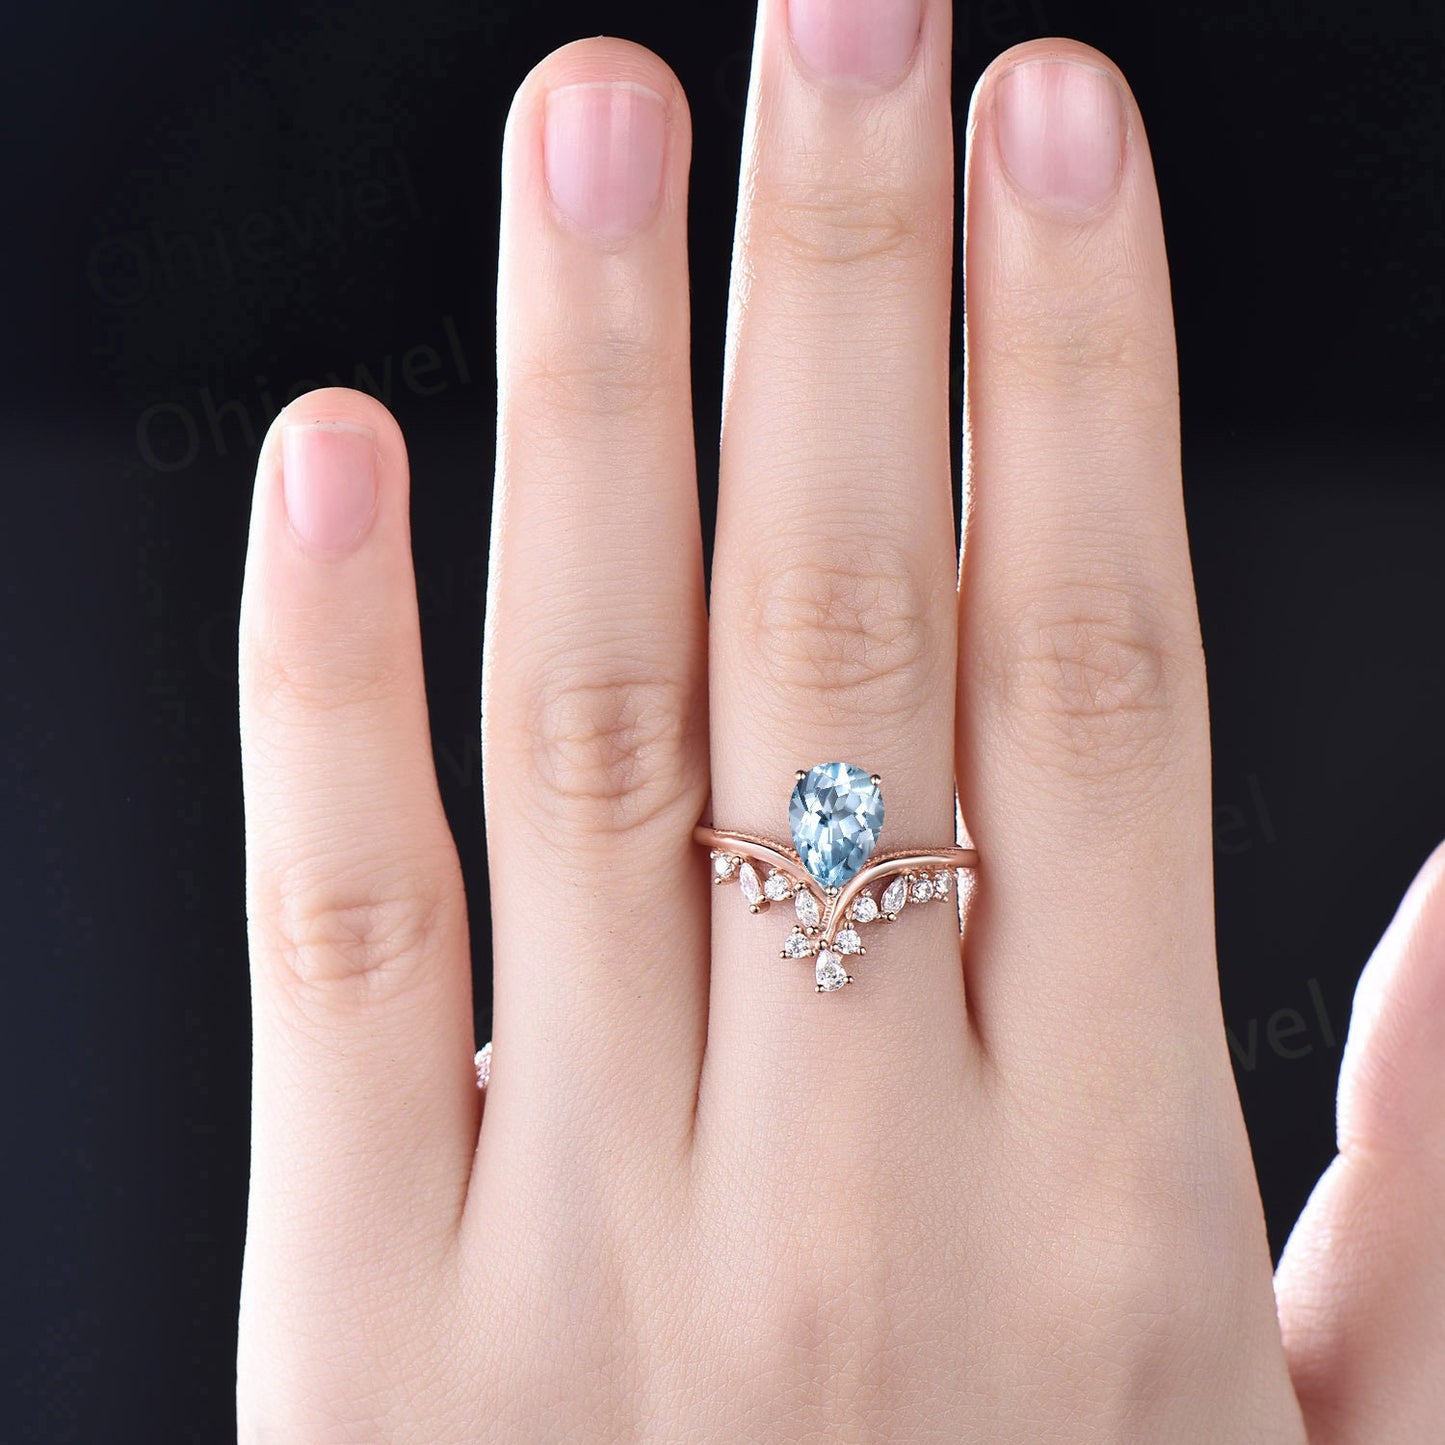 Aquamarine ring vintage pear shaped Aquamarine engagement ring 14k rose gold silver art deco cluster diamond promise wedding ring women gift